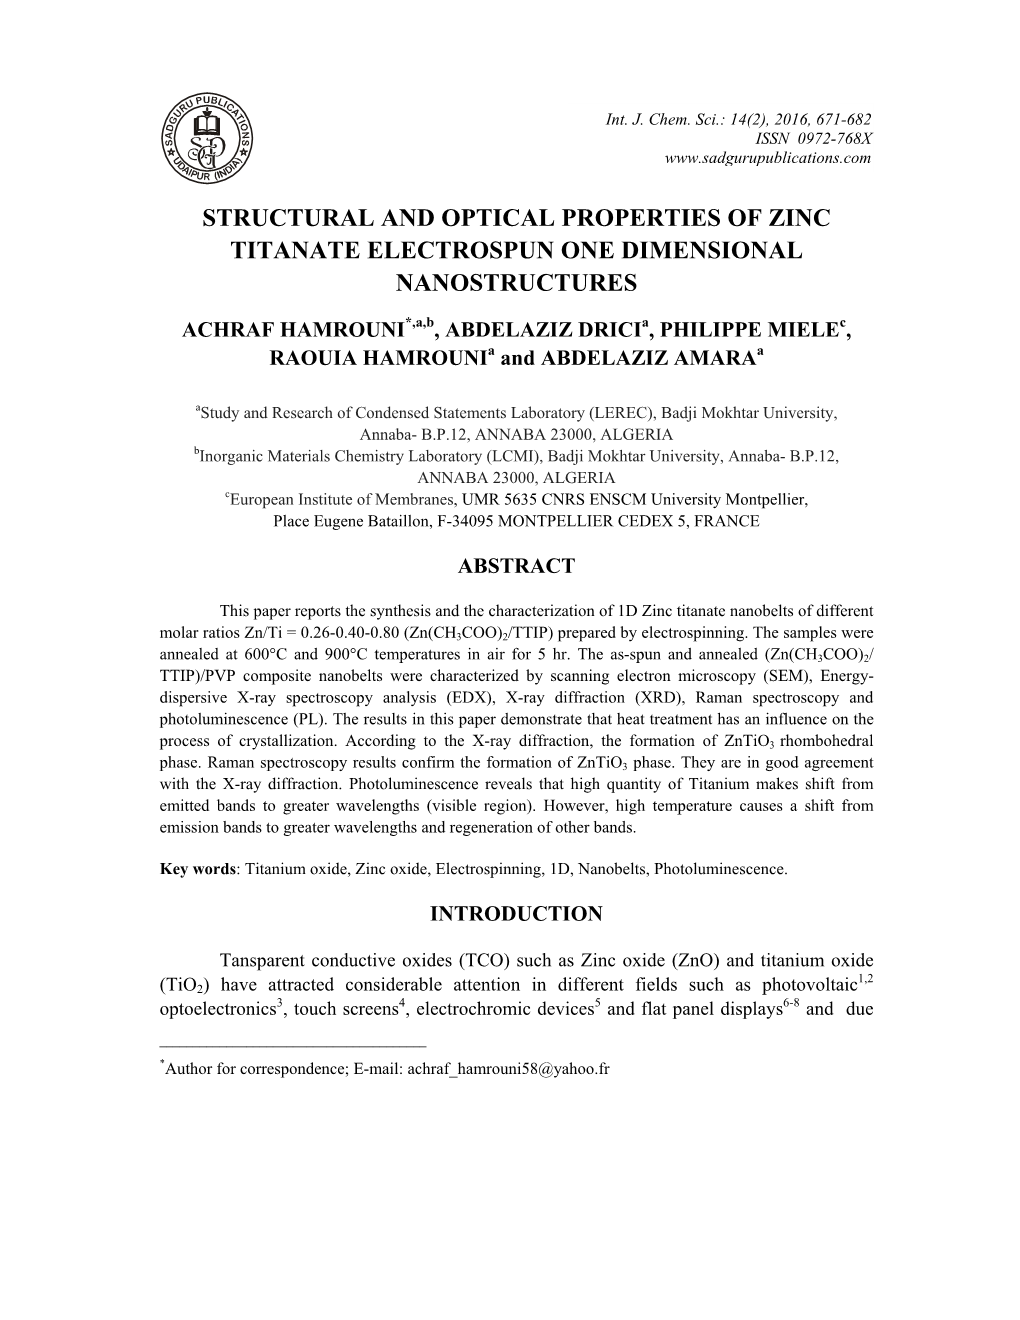 Structural and Optical Properties of Zinc Titanate Electrospun One Dimensional Nanostructures